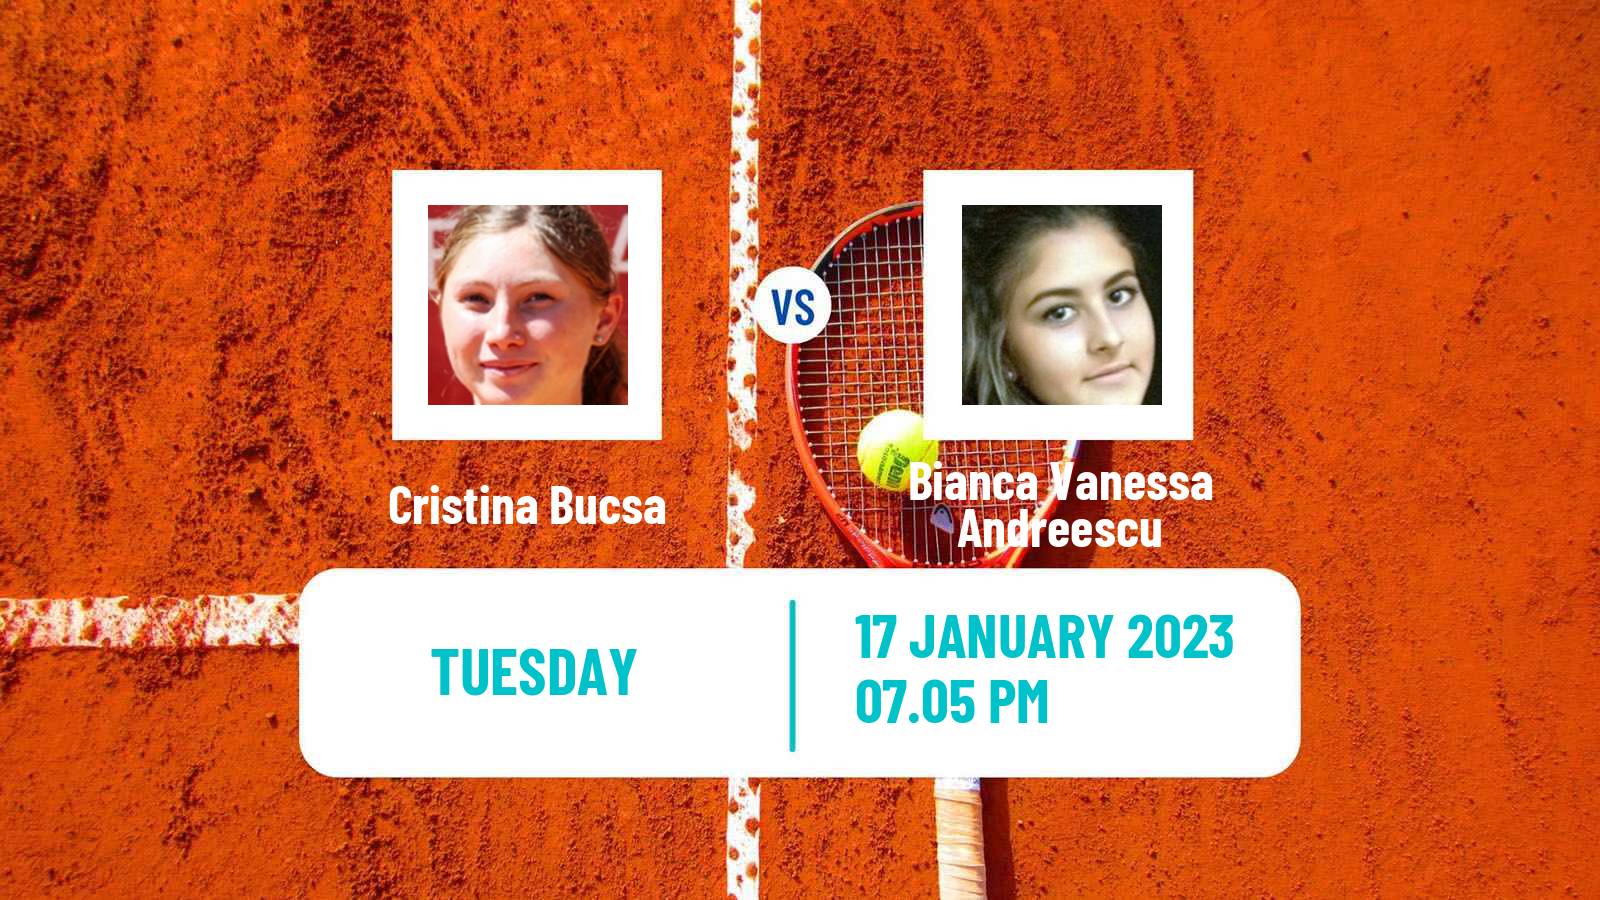 Tennis WTA Australian Open Cristina Bucsa - Bianca Vanessa Andreescu